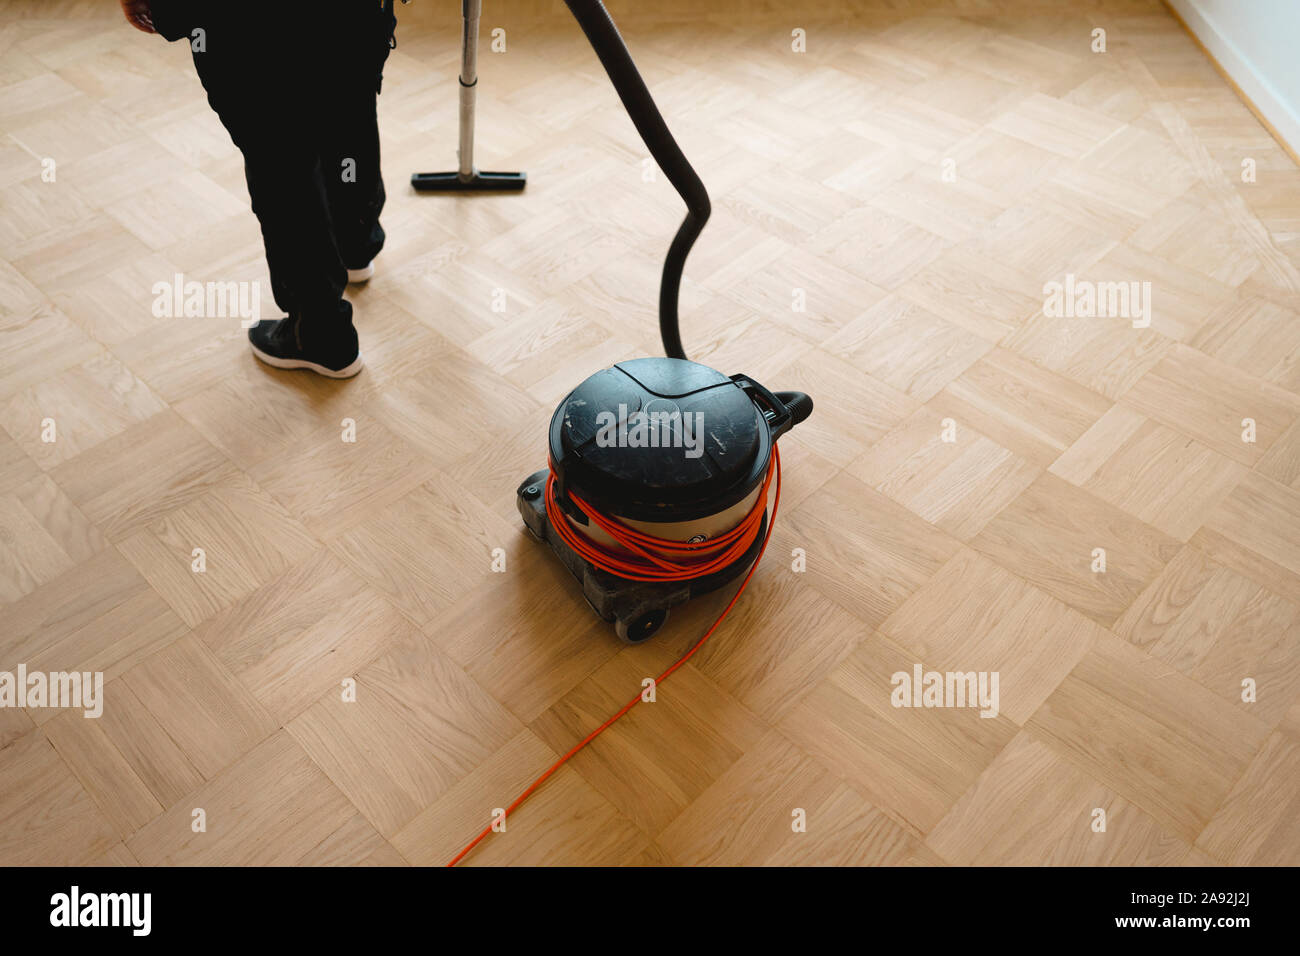 Vacuuming parquet floor Stock Photo